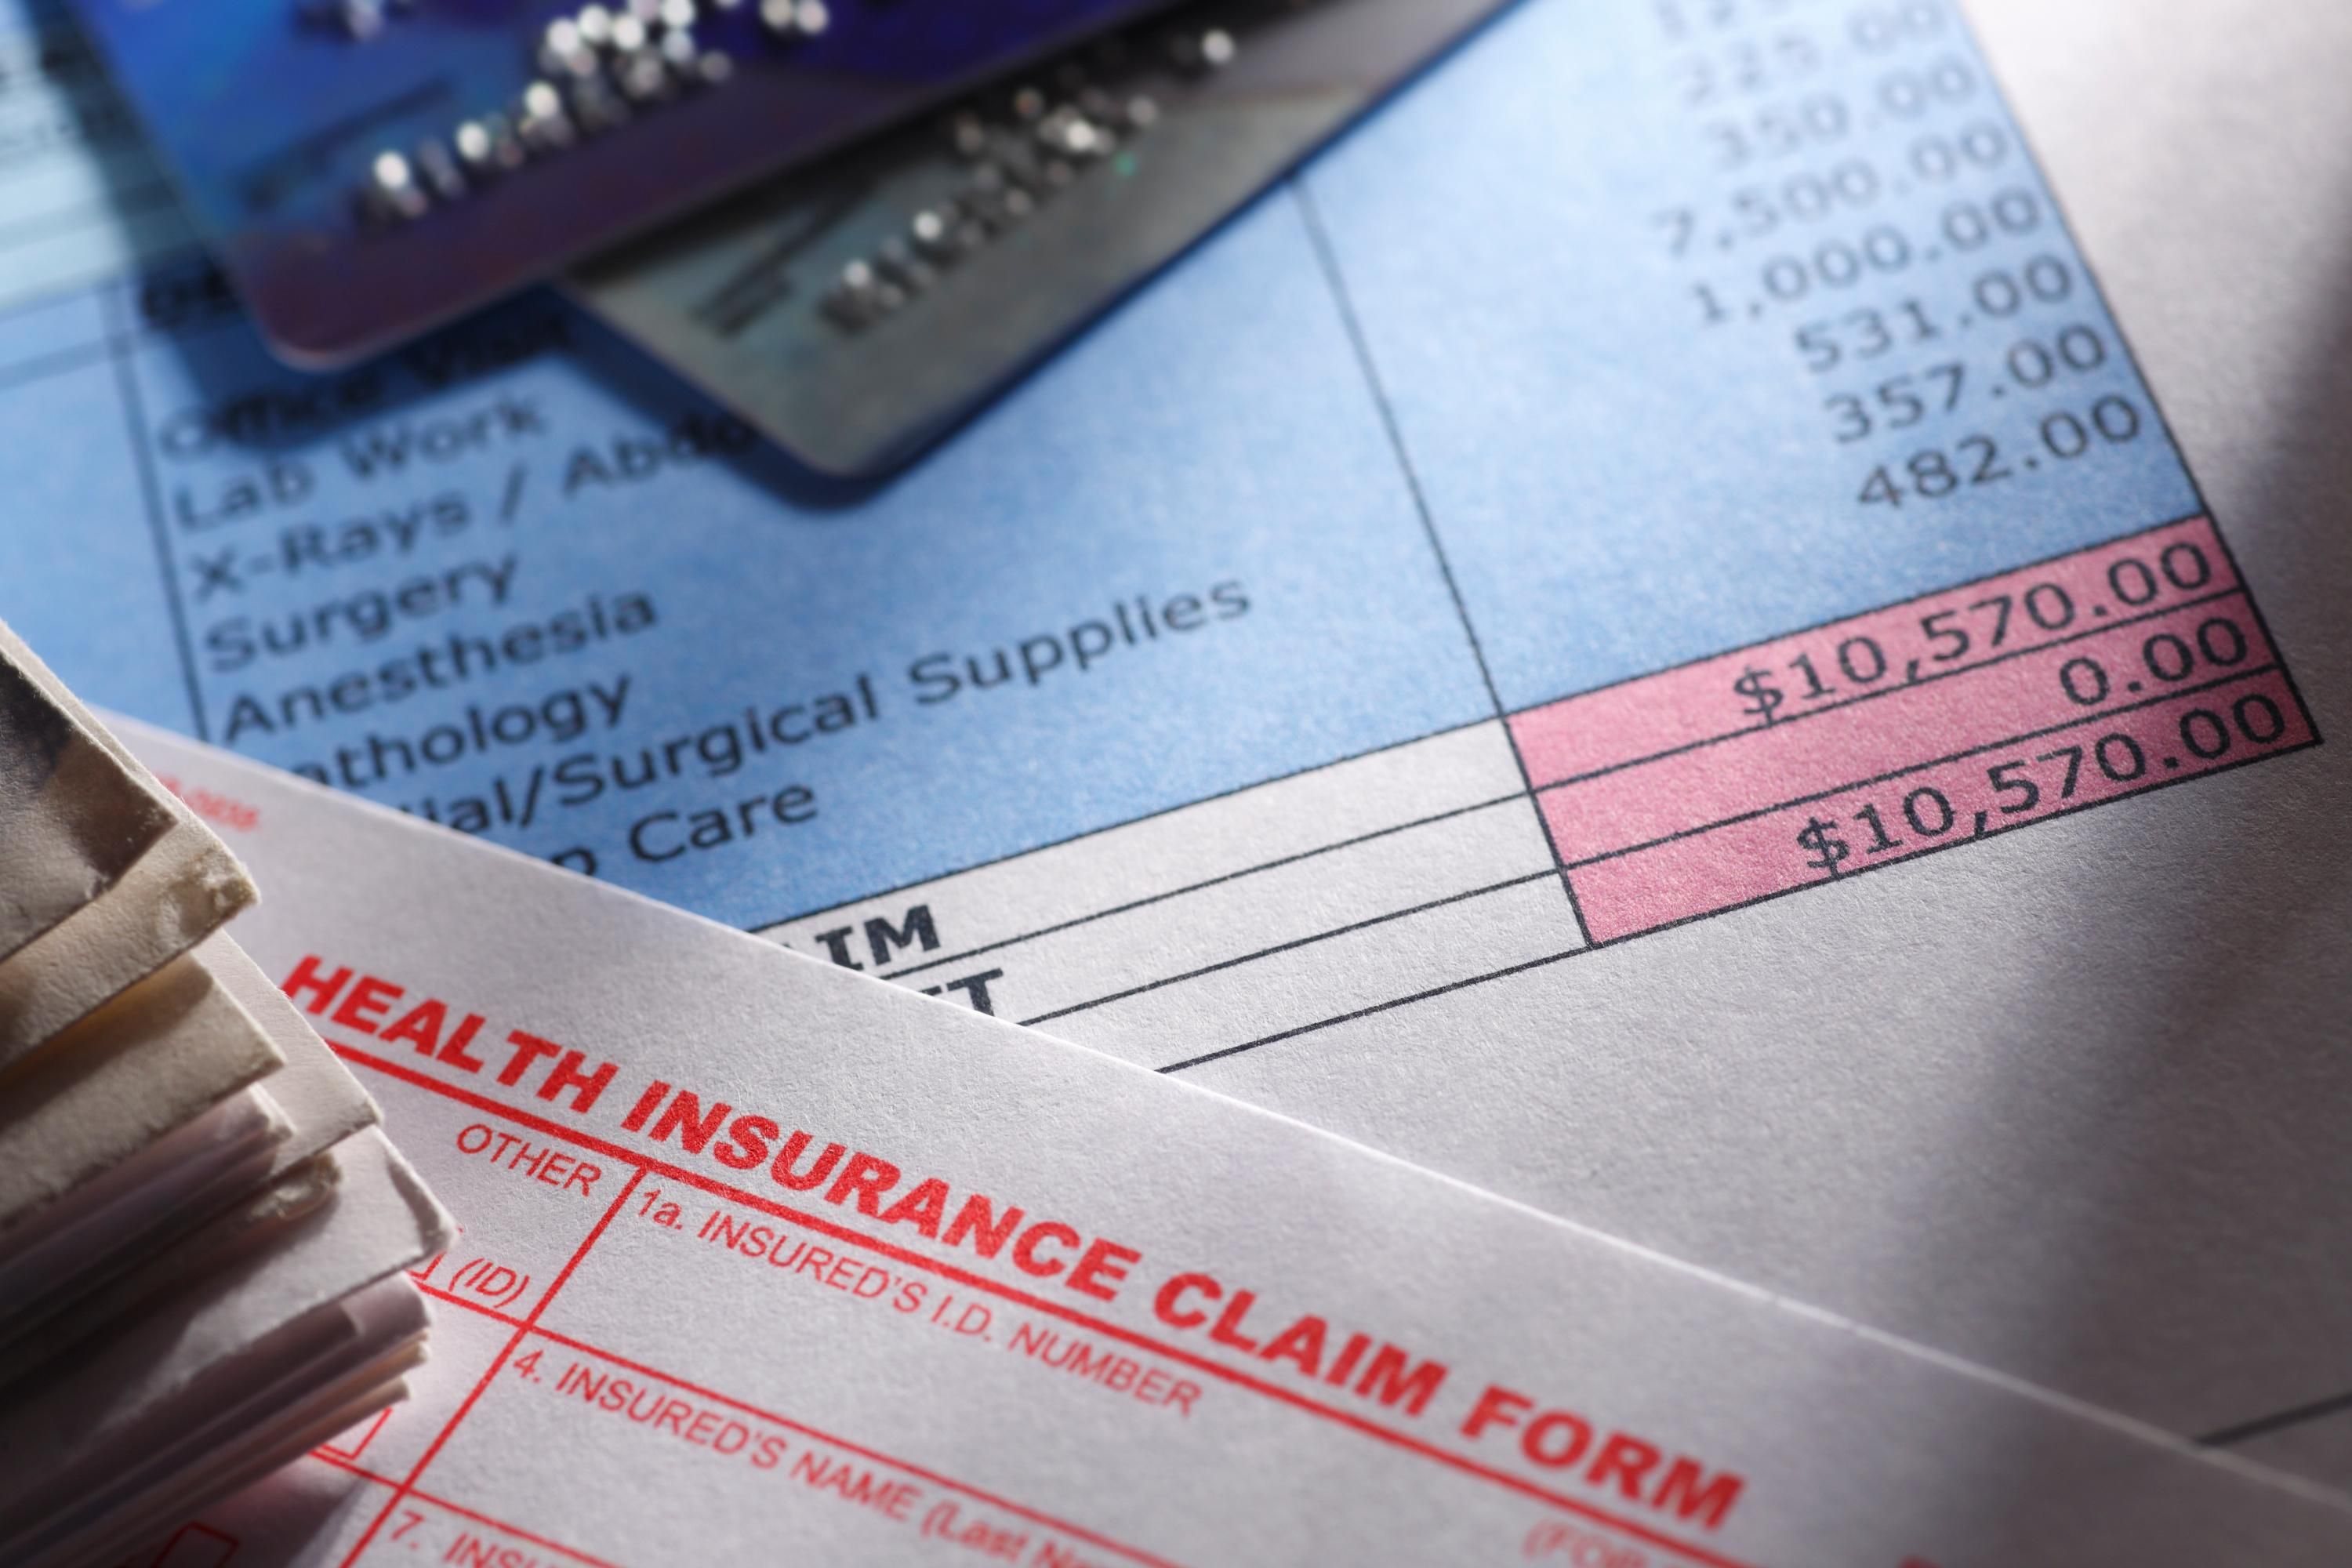 A medical bill shows a health insurance claim